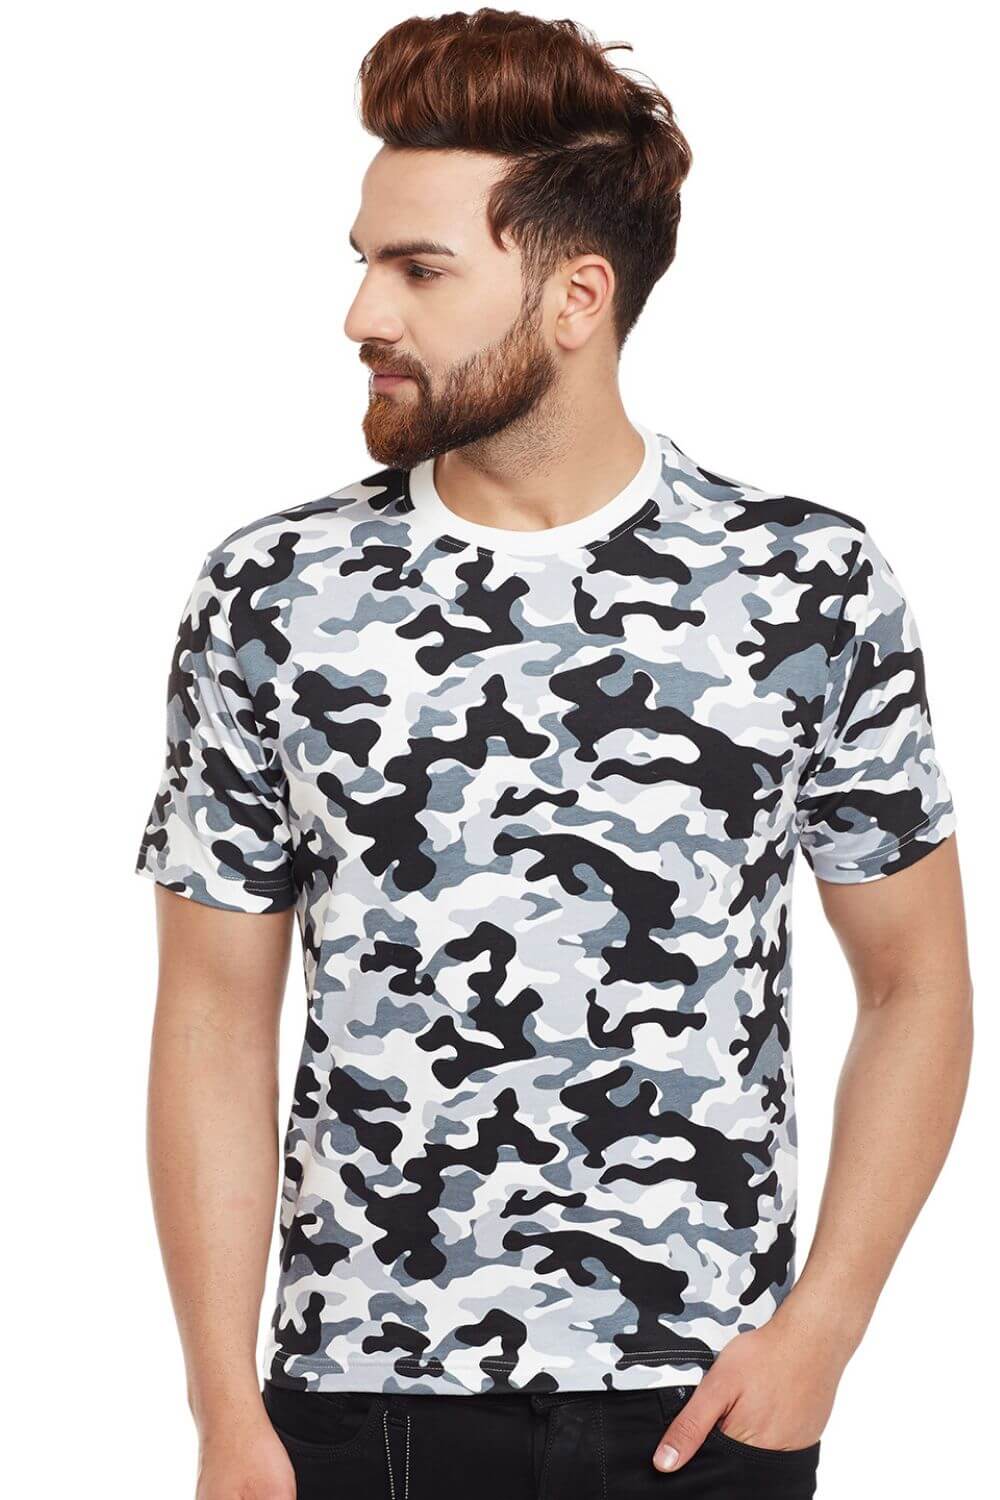 Visavi Men Camouflage T-shirt - GREY BLACK